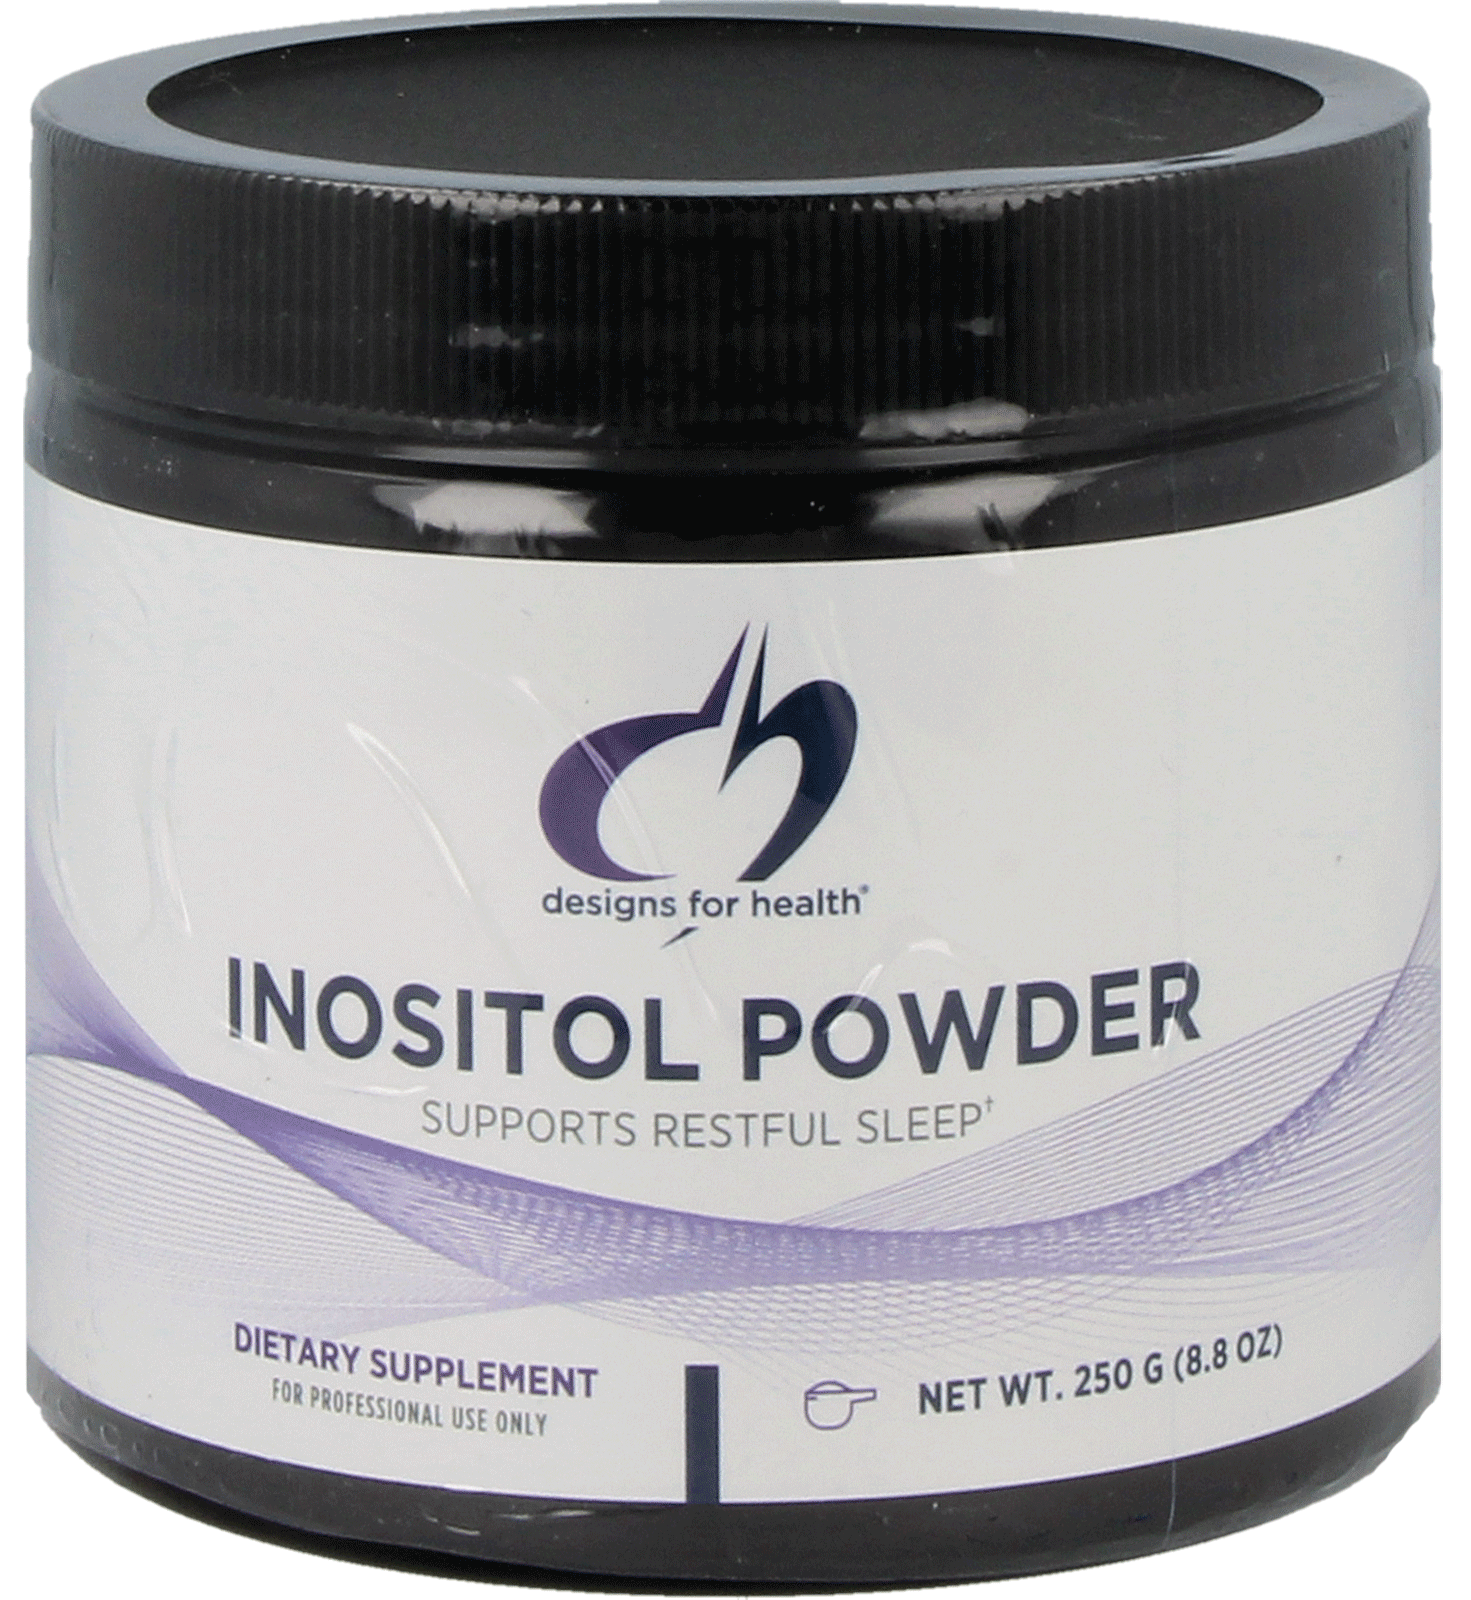 Inositol Powder 